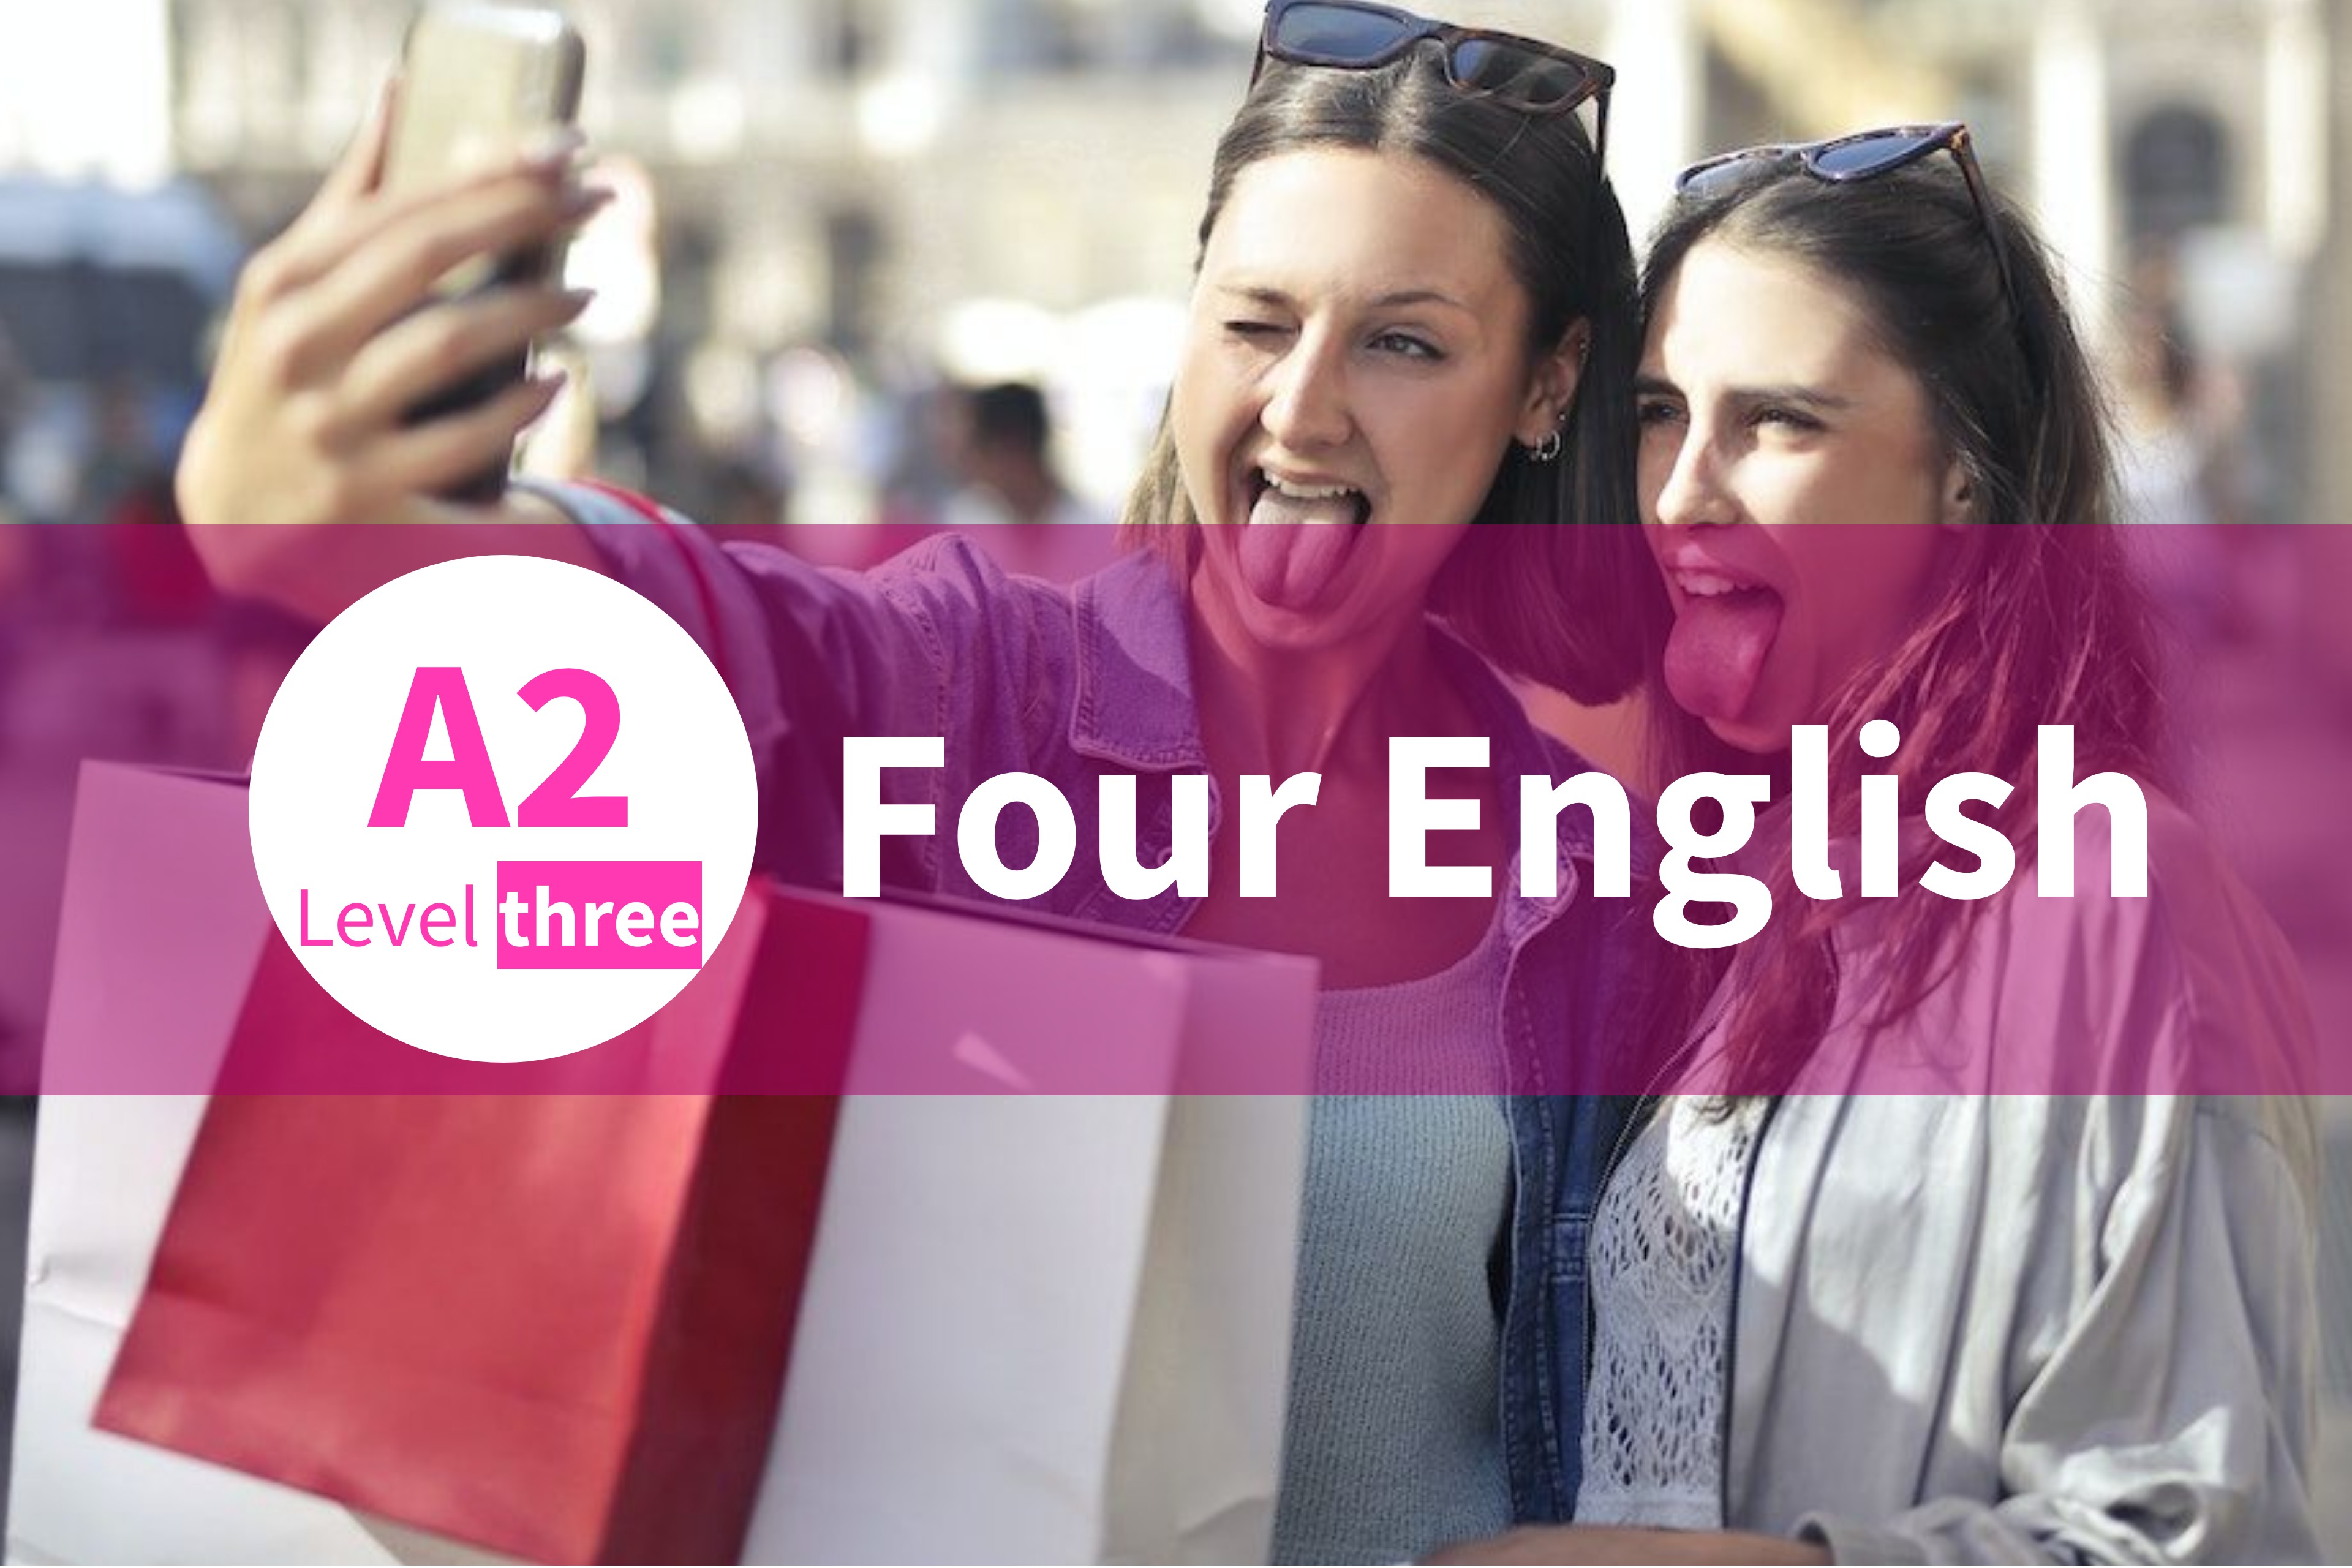 FOUR ENGLISH A2 - LEVEL THREE